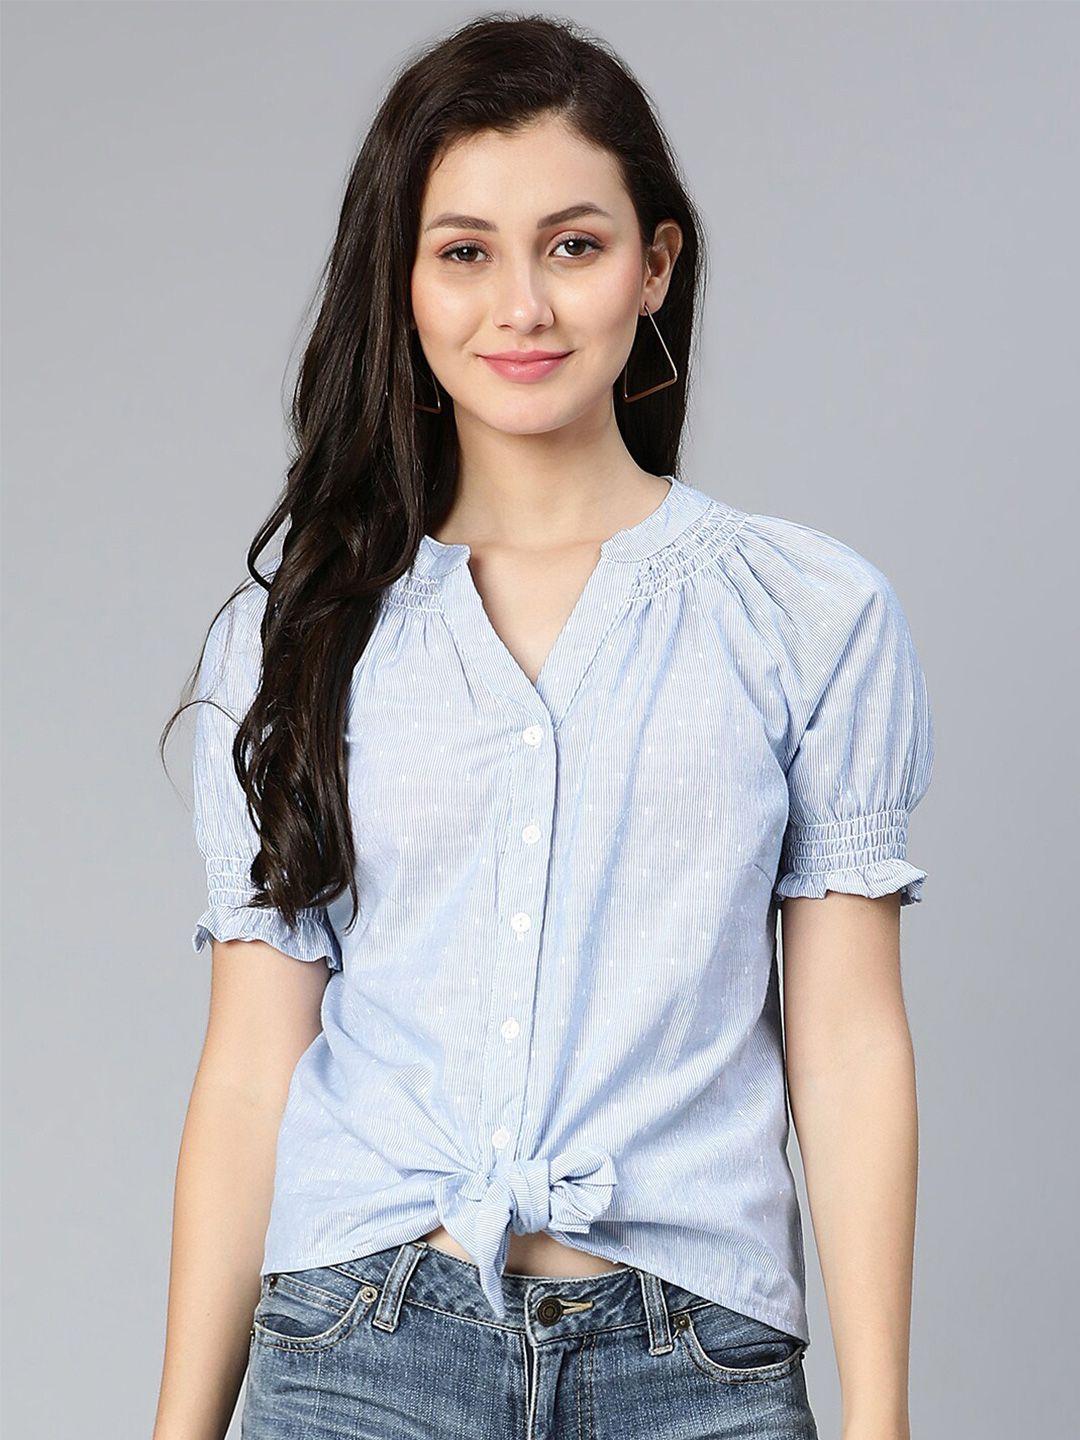 oxolloxo blue & white striped mandarin collar shirt style top